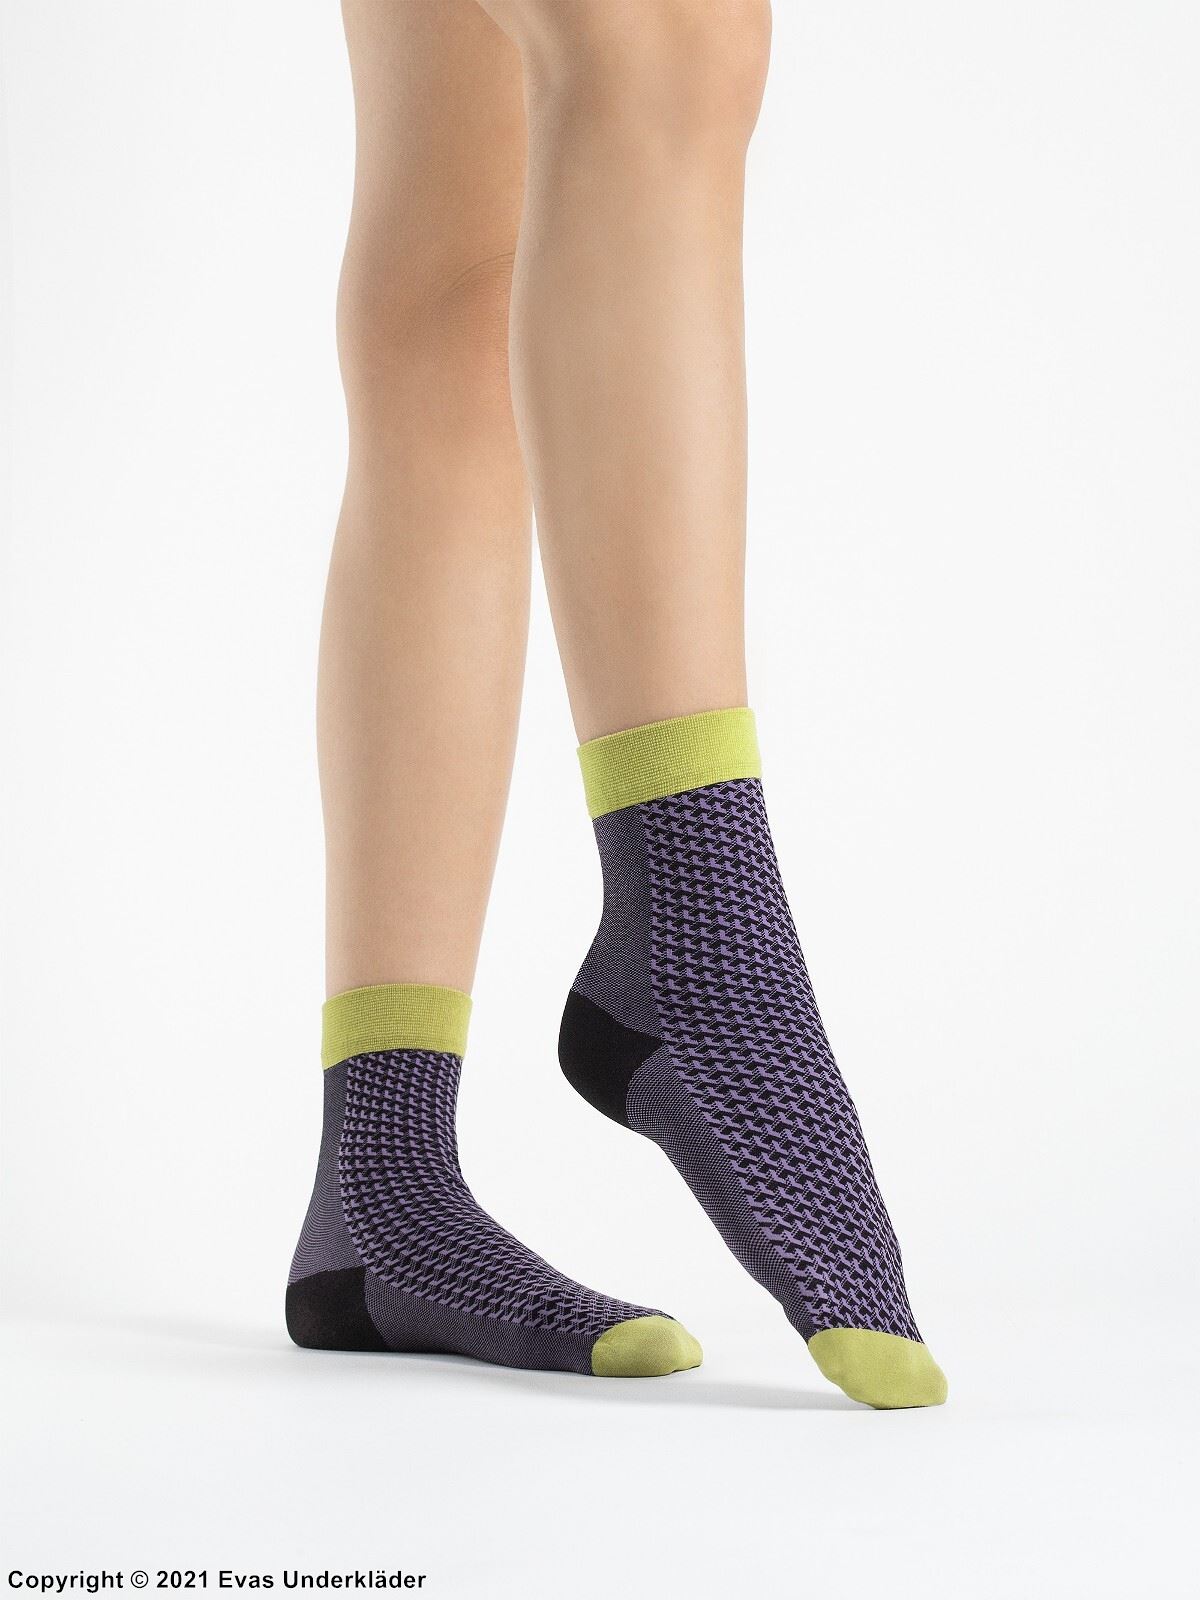 Ankle socks, intricate pattern